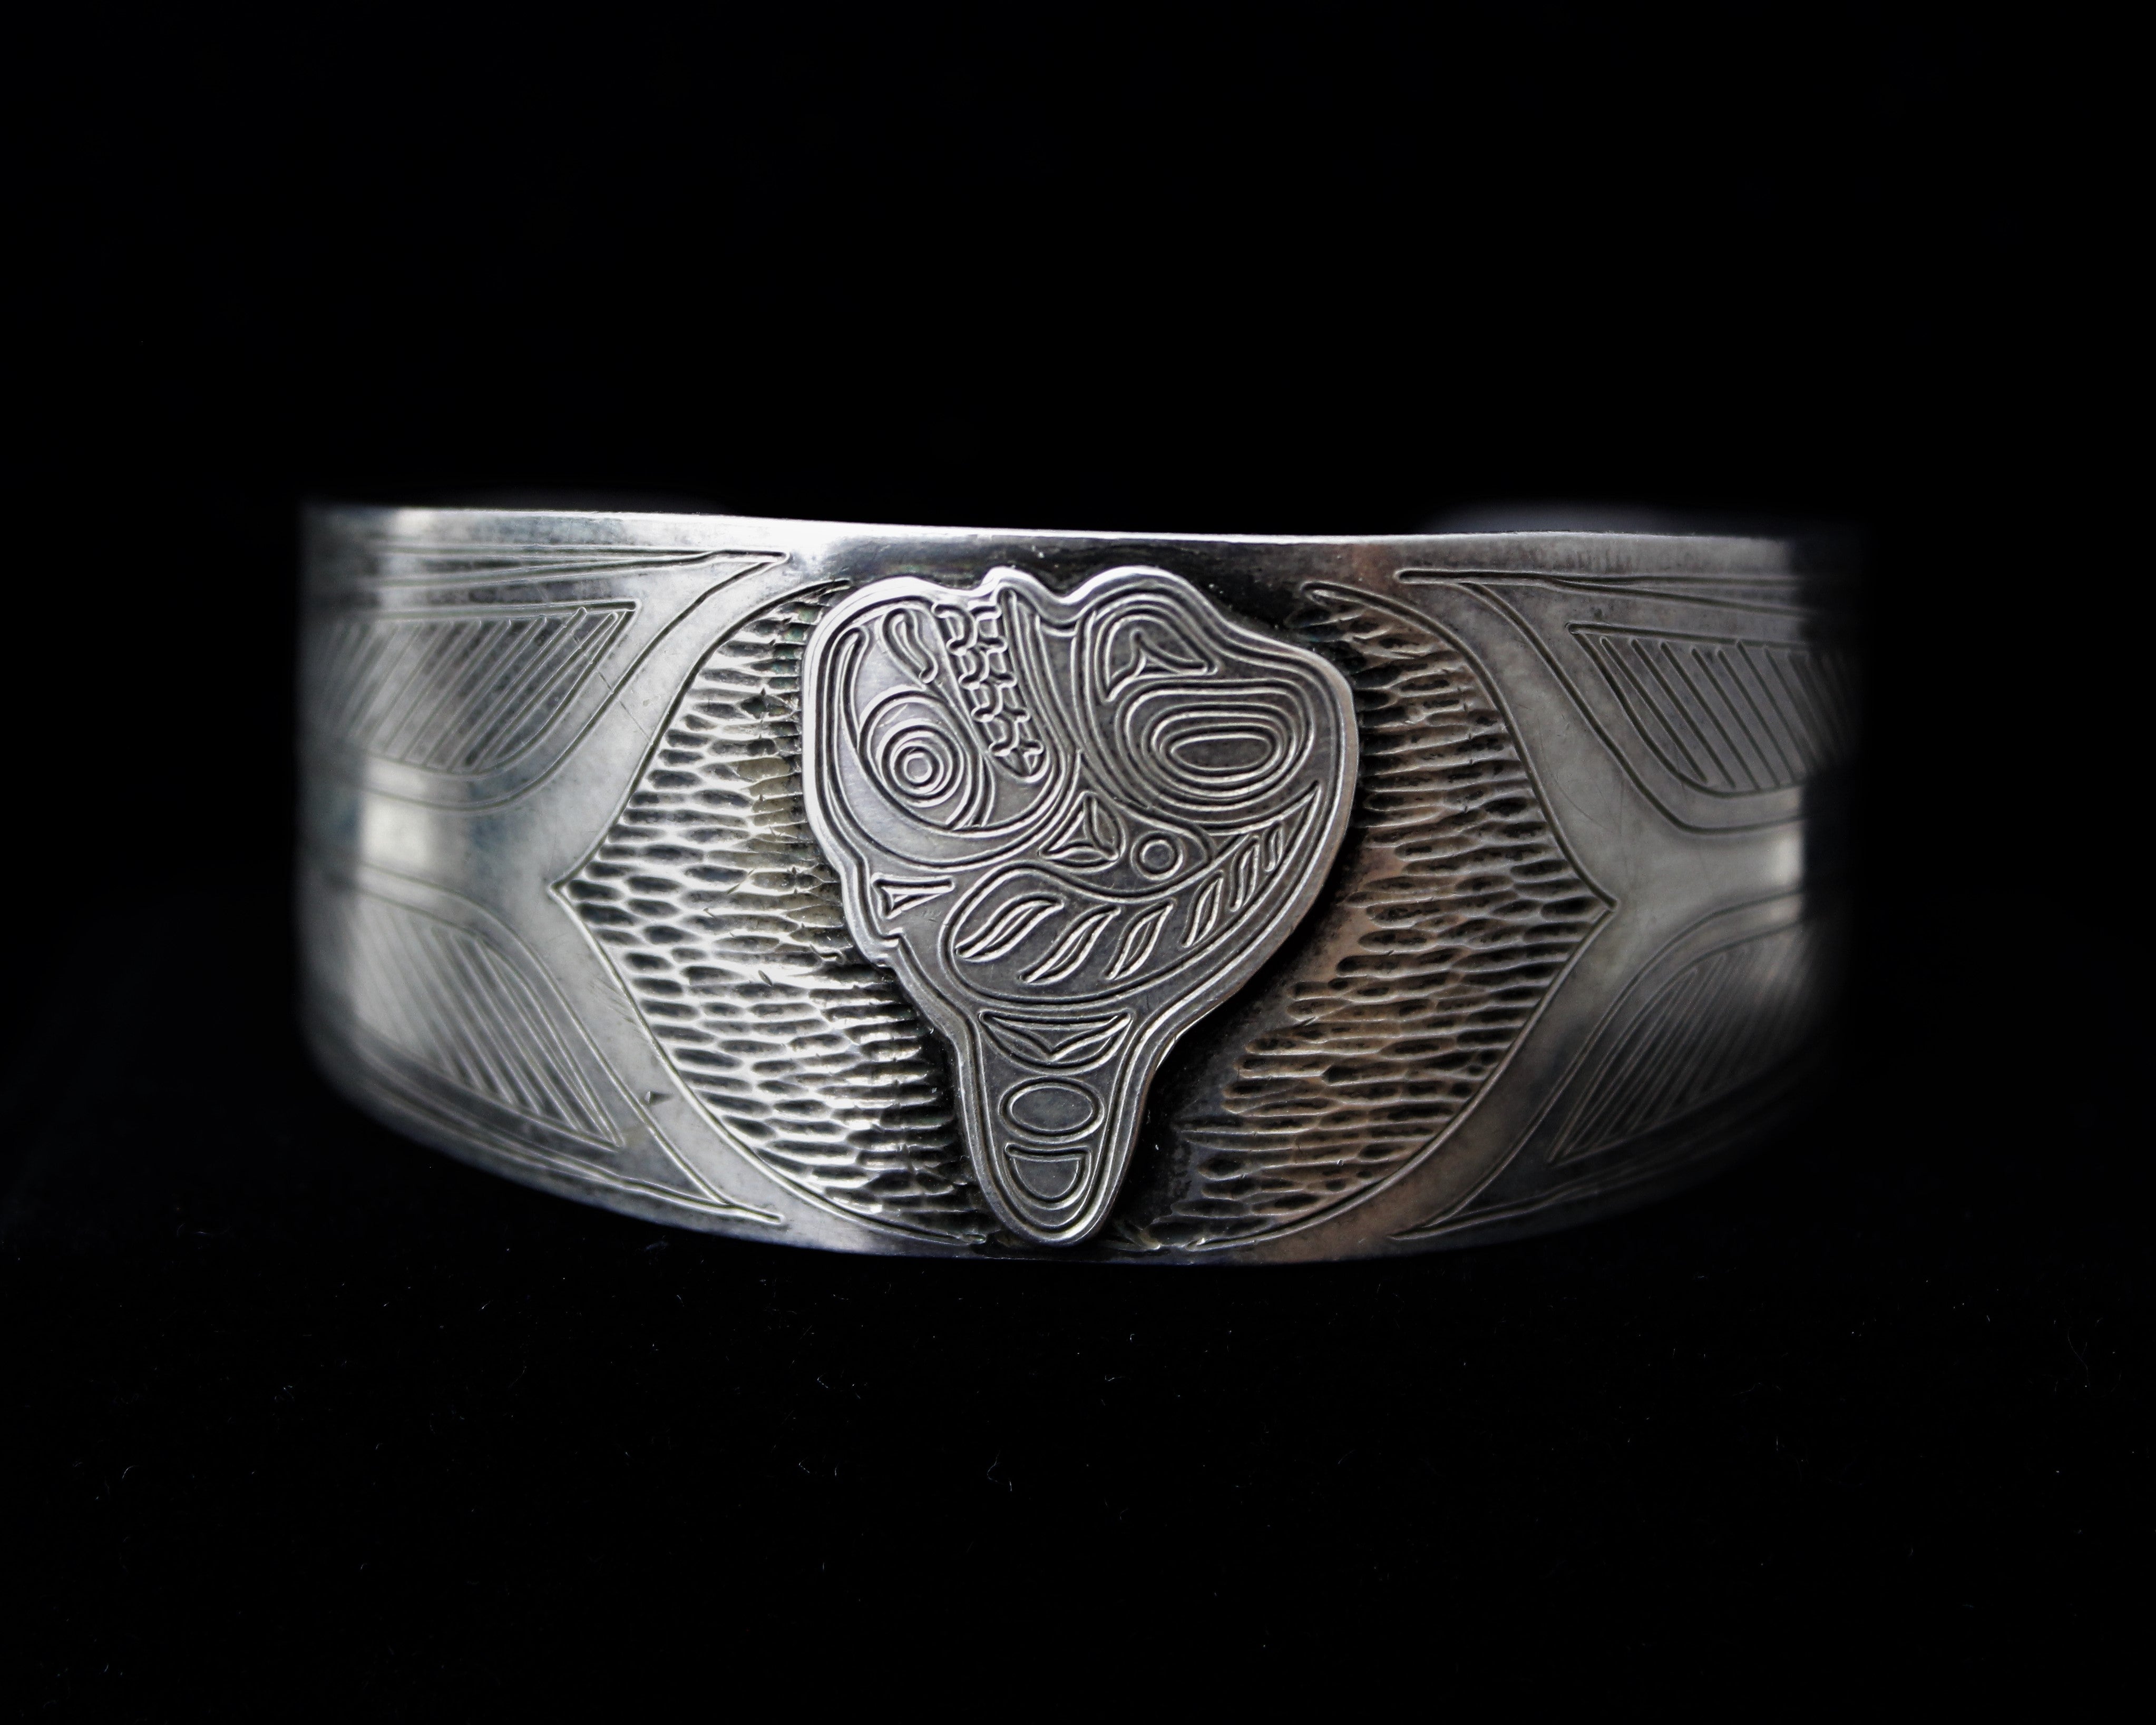 Sterling Silver Alaska Bracelet